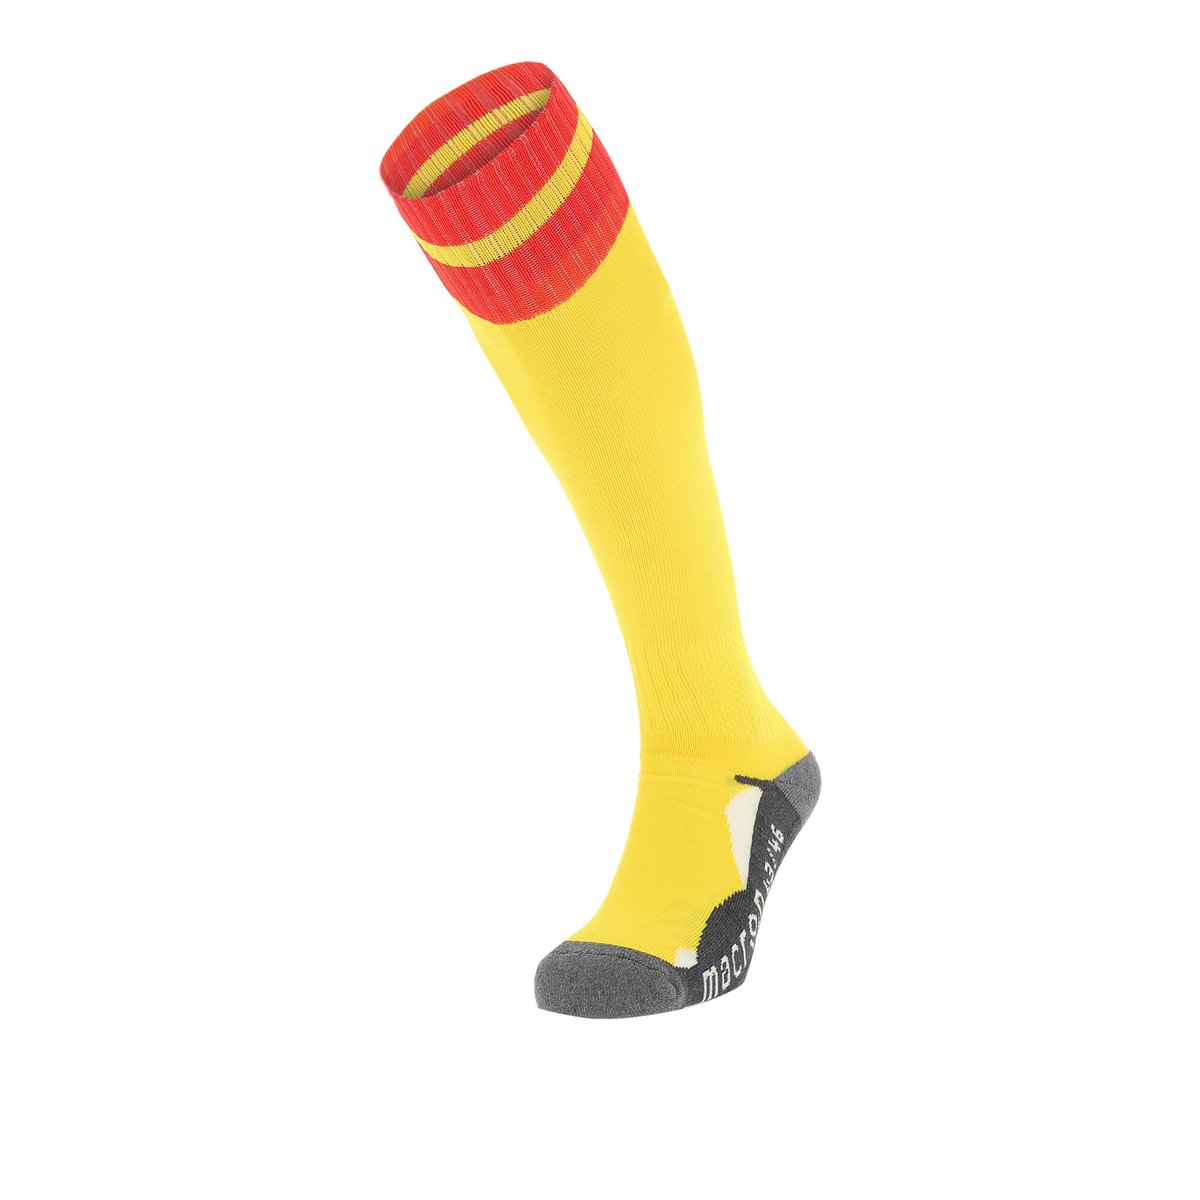 Macron Azlon Match Sock - Yellow/Red (Pack of 5)